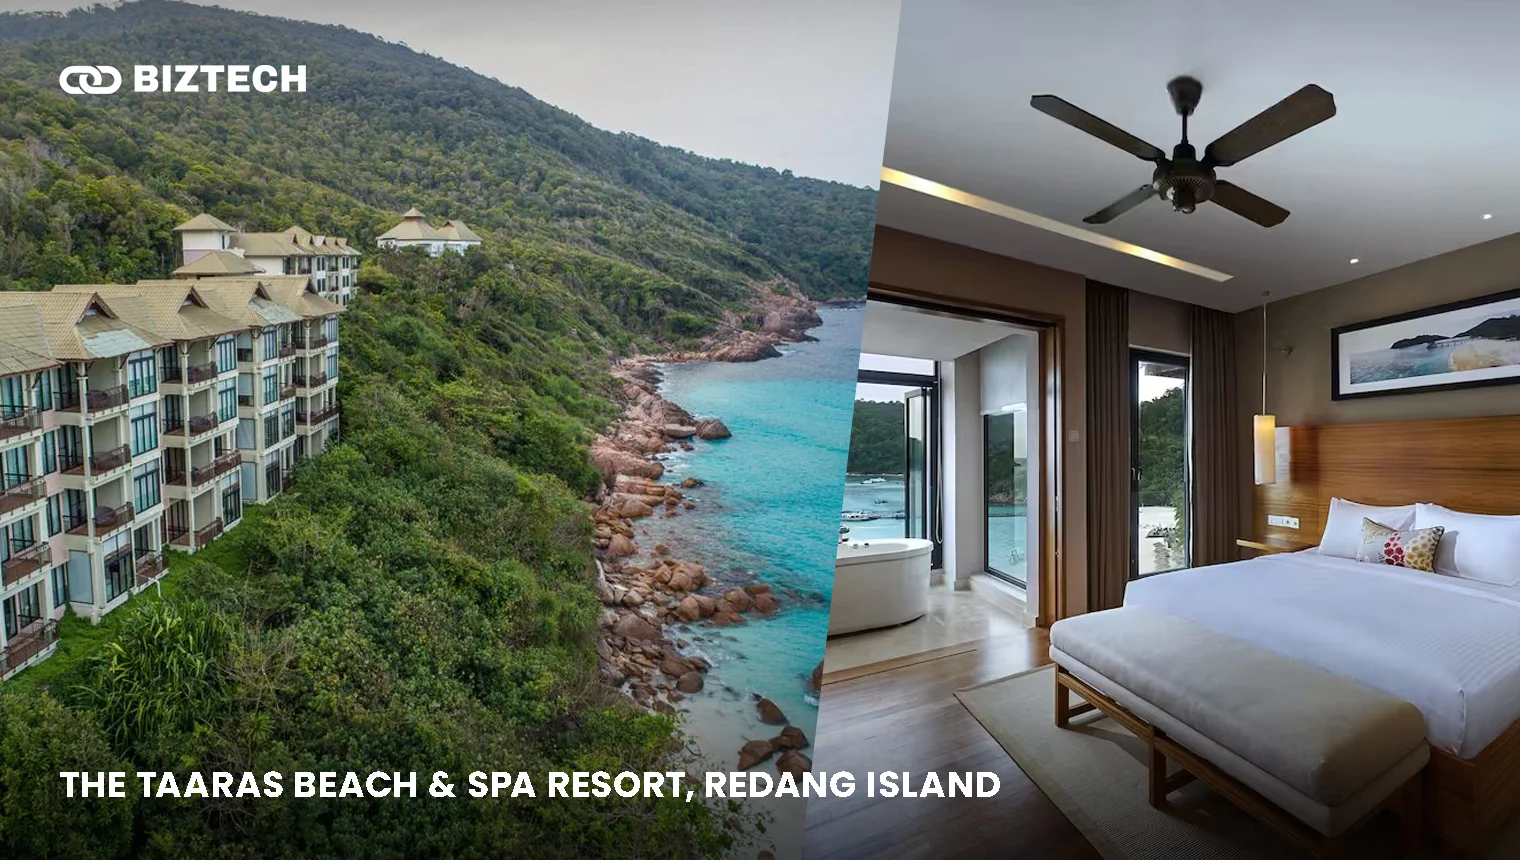 The Taaras Beach & Spa Resort, Redang Island